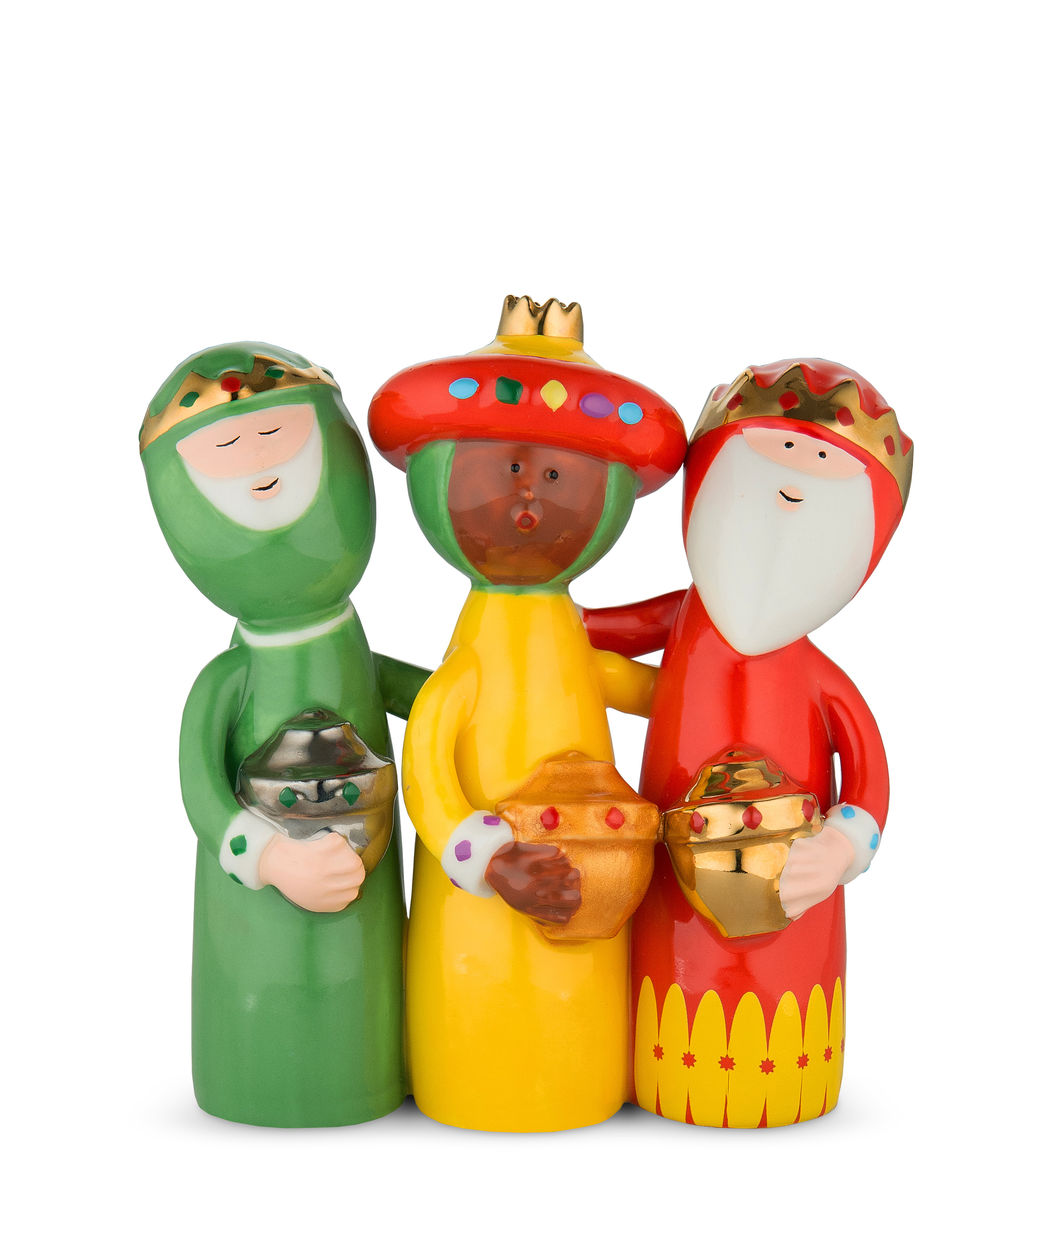 Alessi Uno, Due, Tre Re Magi (Three Kings) Christmas Figurine